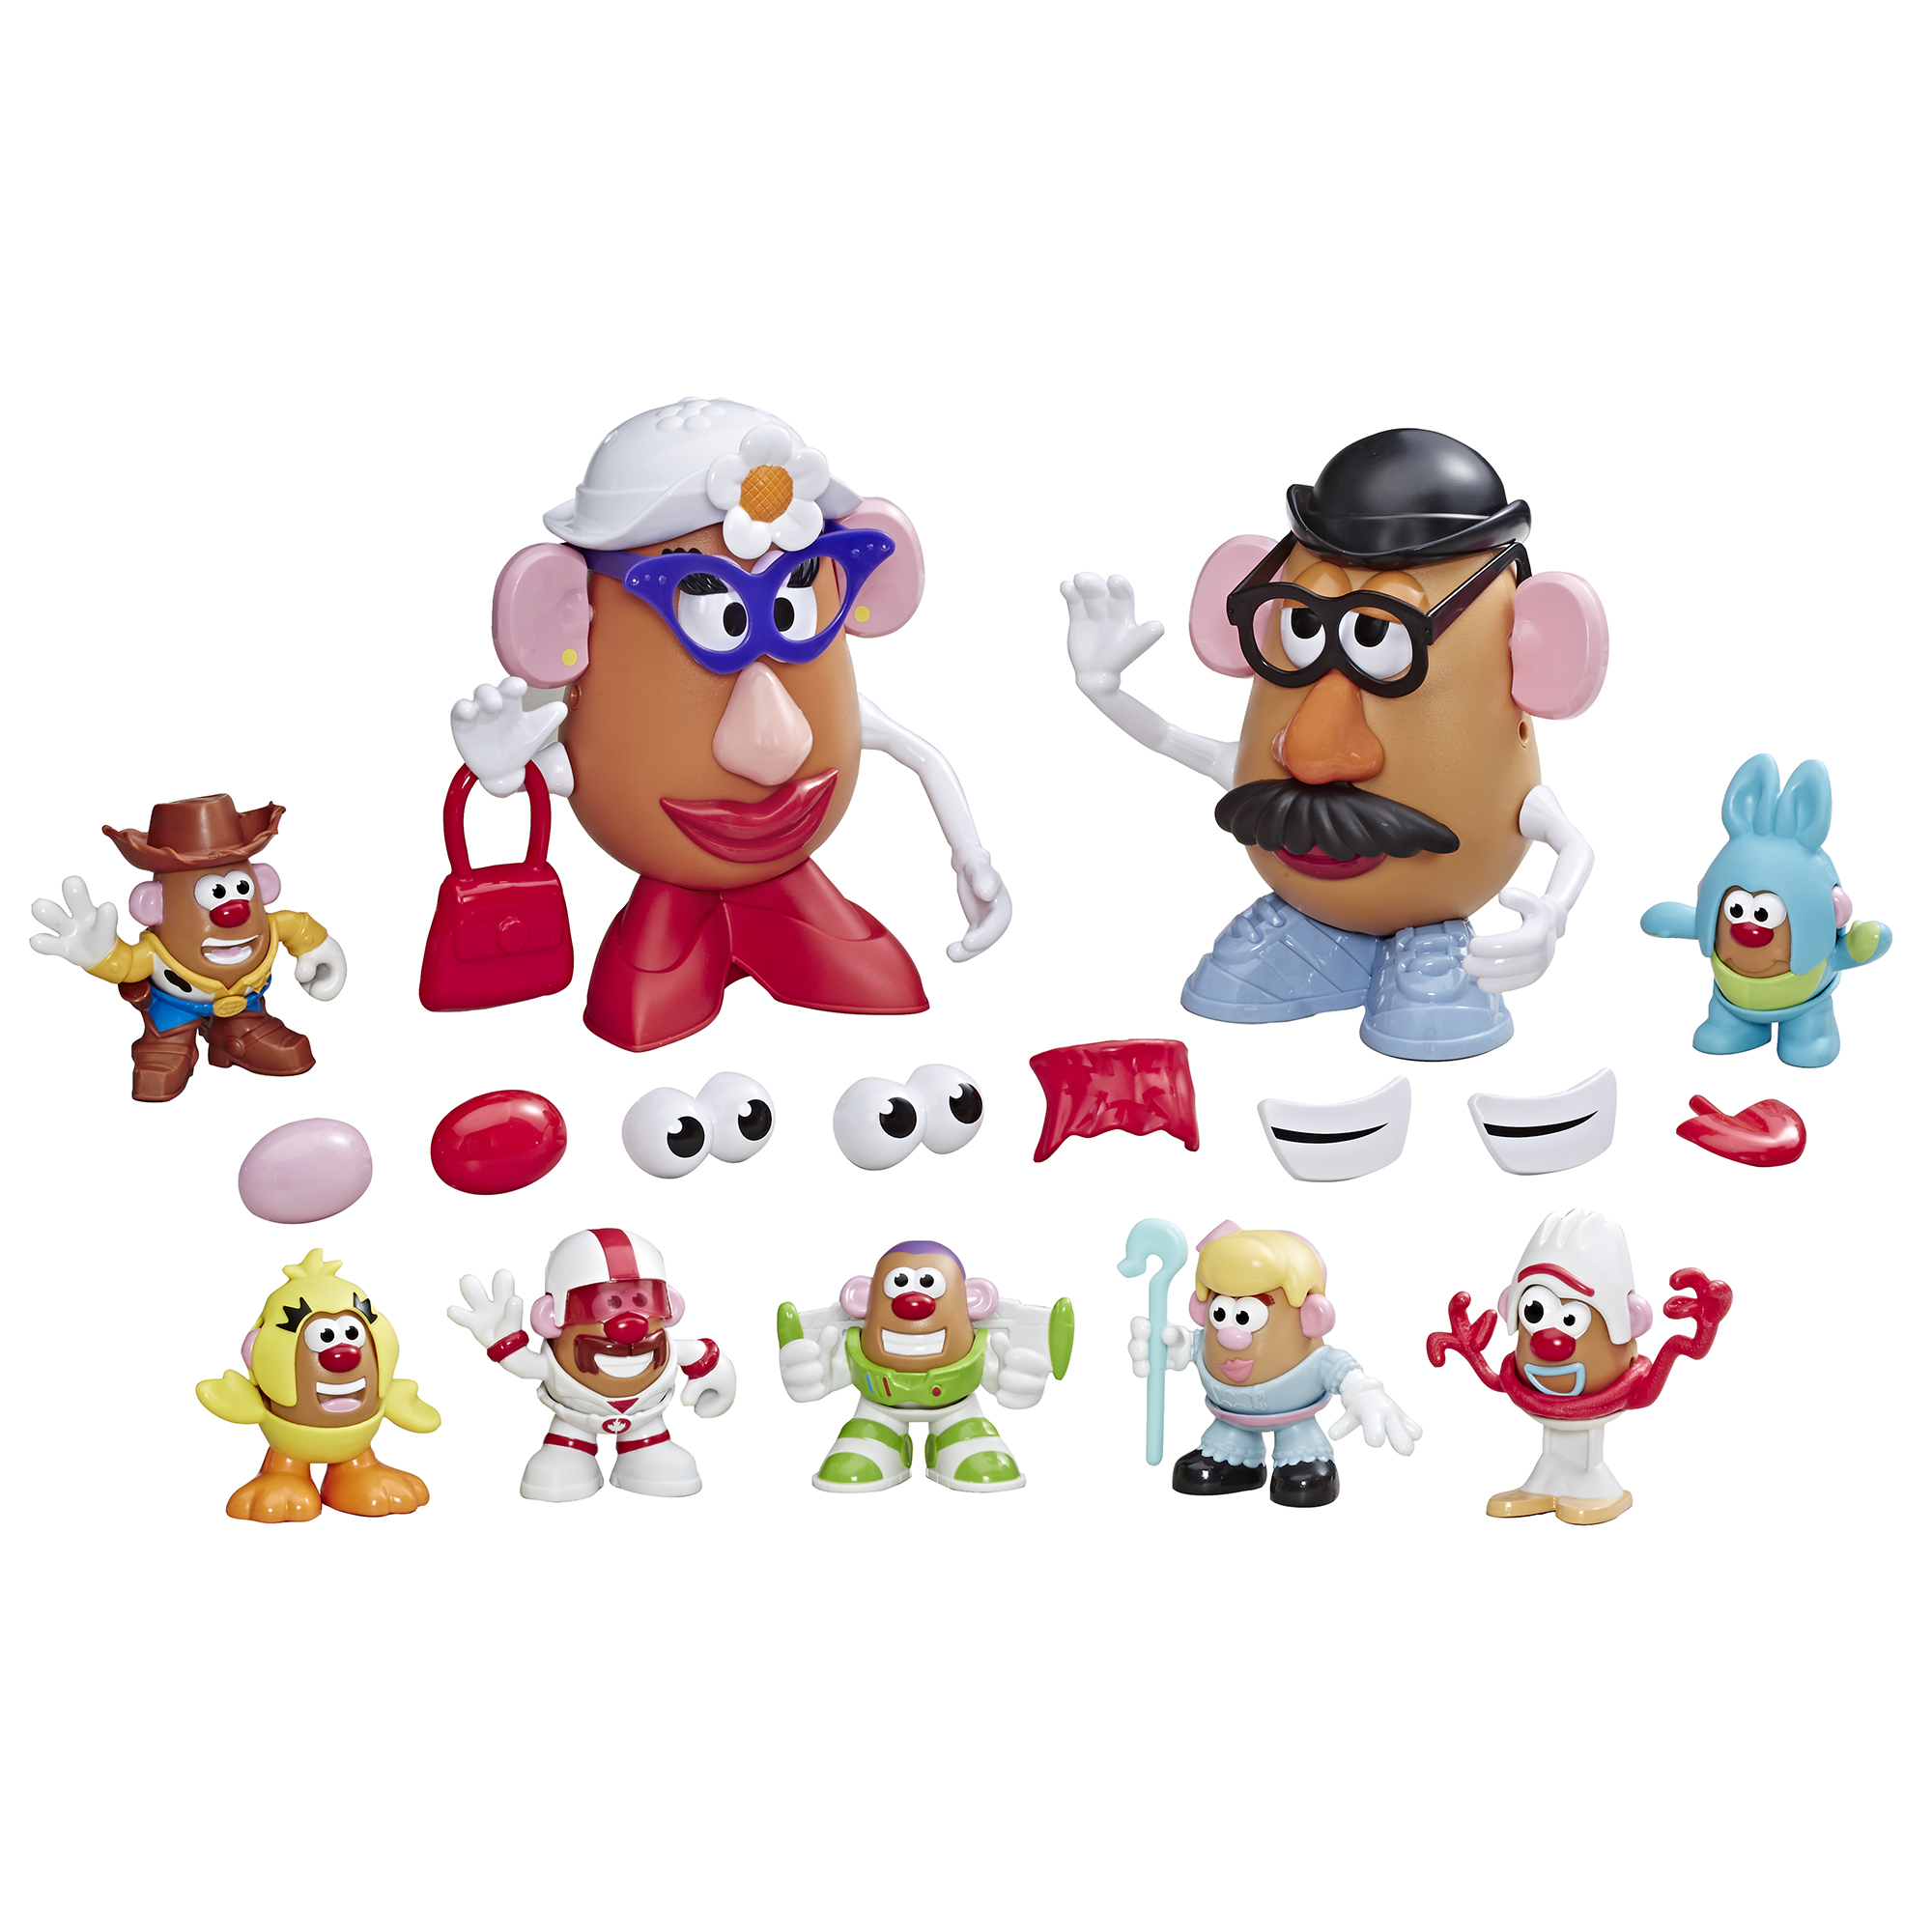 Mr Potato Head Toy Story 4 Toy - HD Wallpaper 